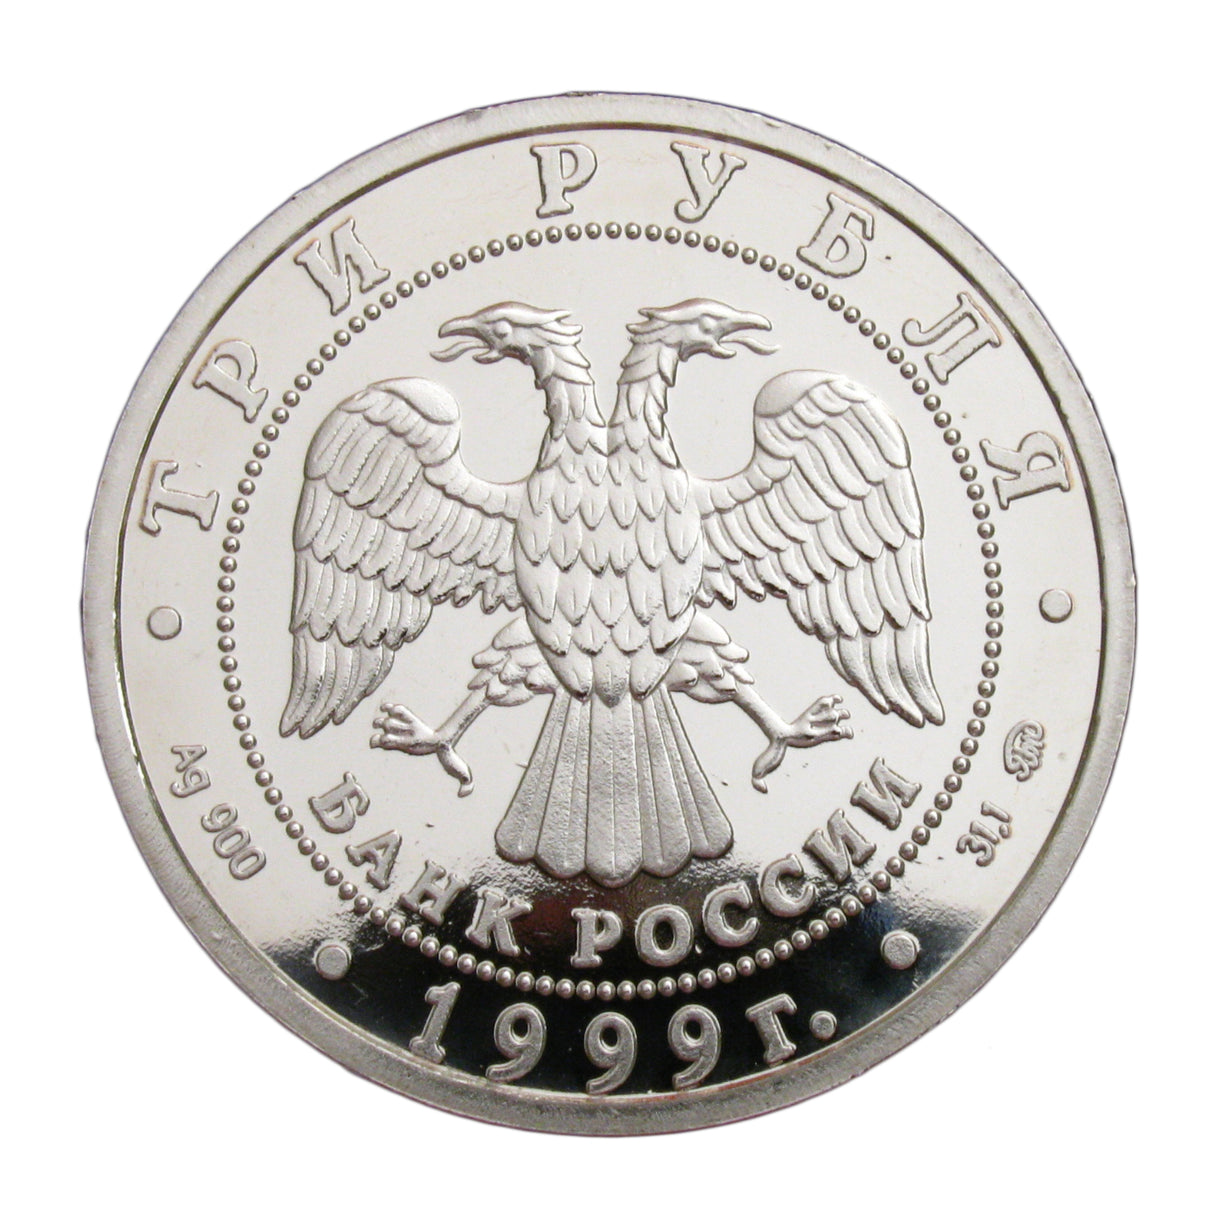 China & Russia Friendship 50th Anniversary Silver Coin